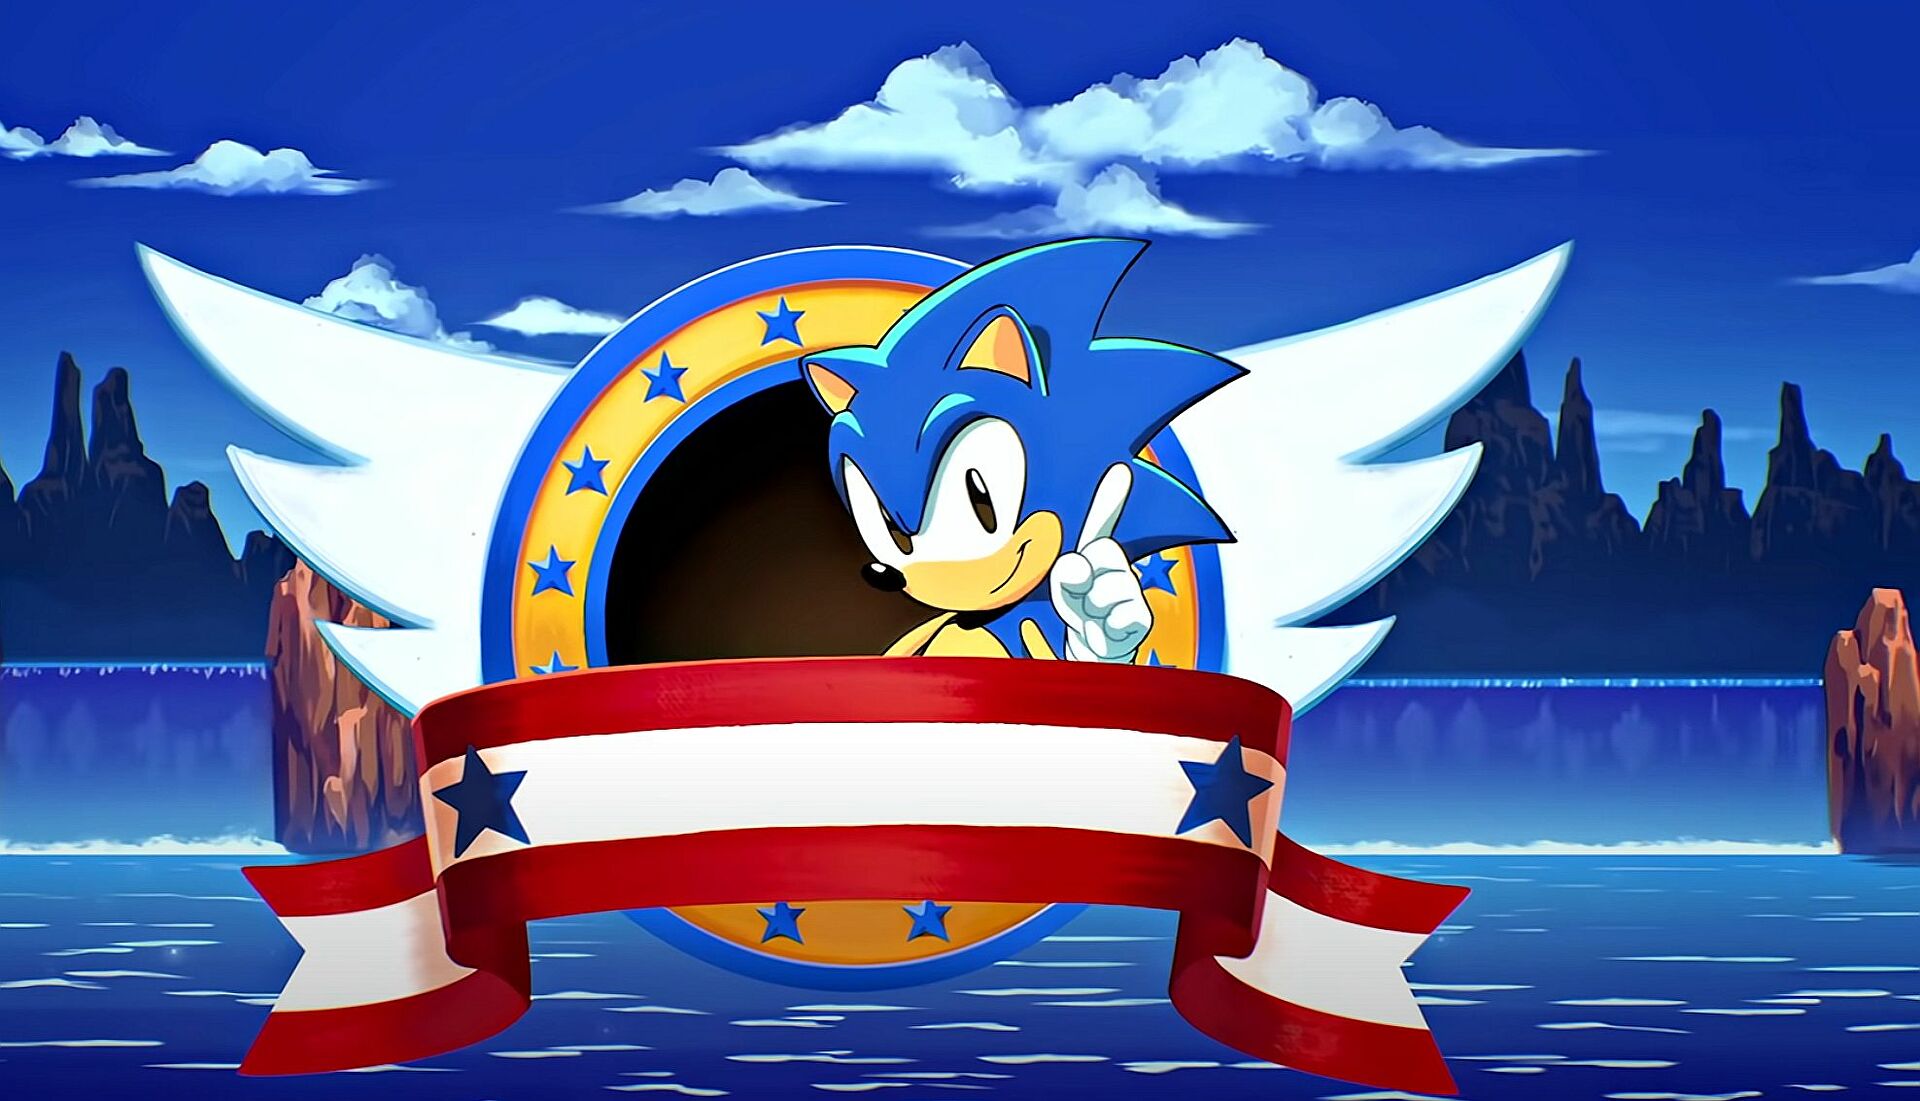 SEGA’s Sonic the Hedgehog series has sold an impressive 1.5 billion copies worldwide